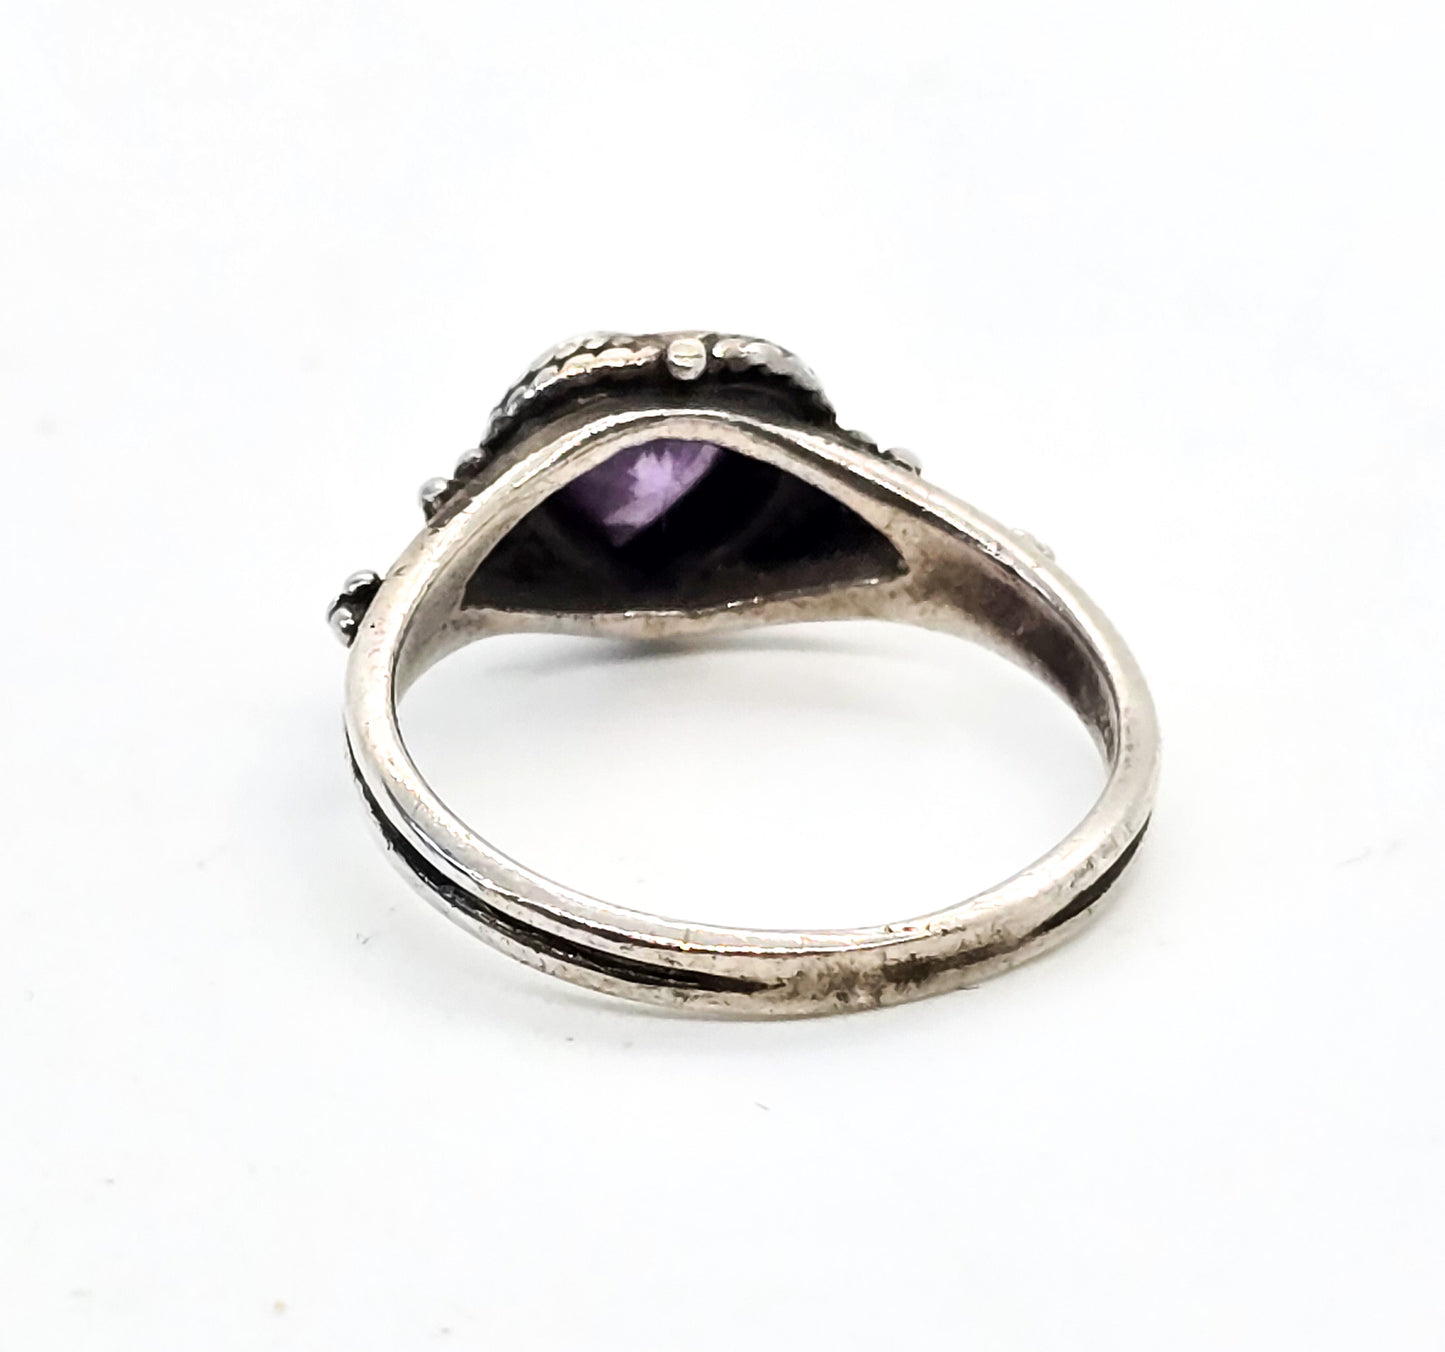 SE Purple heart Cubic Zirconia CZ brilliant tribal vintage sterling silver ring size 7